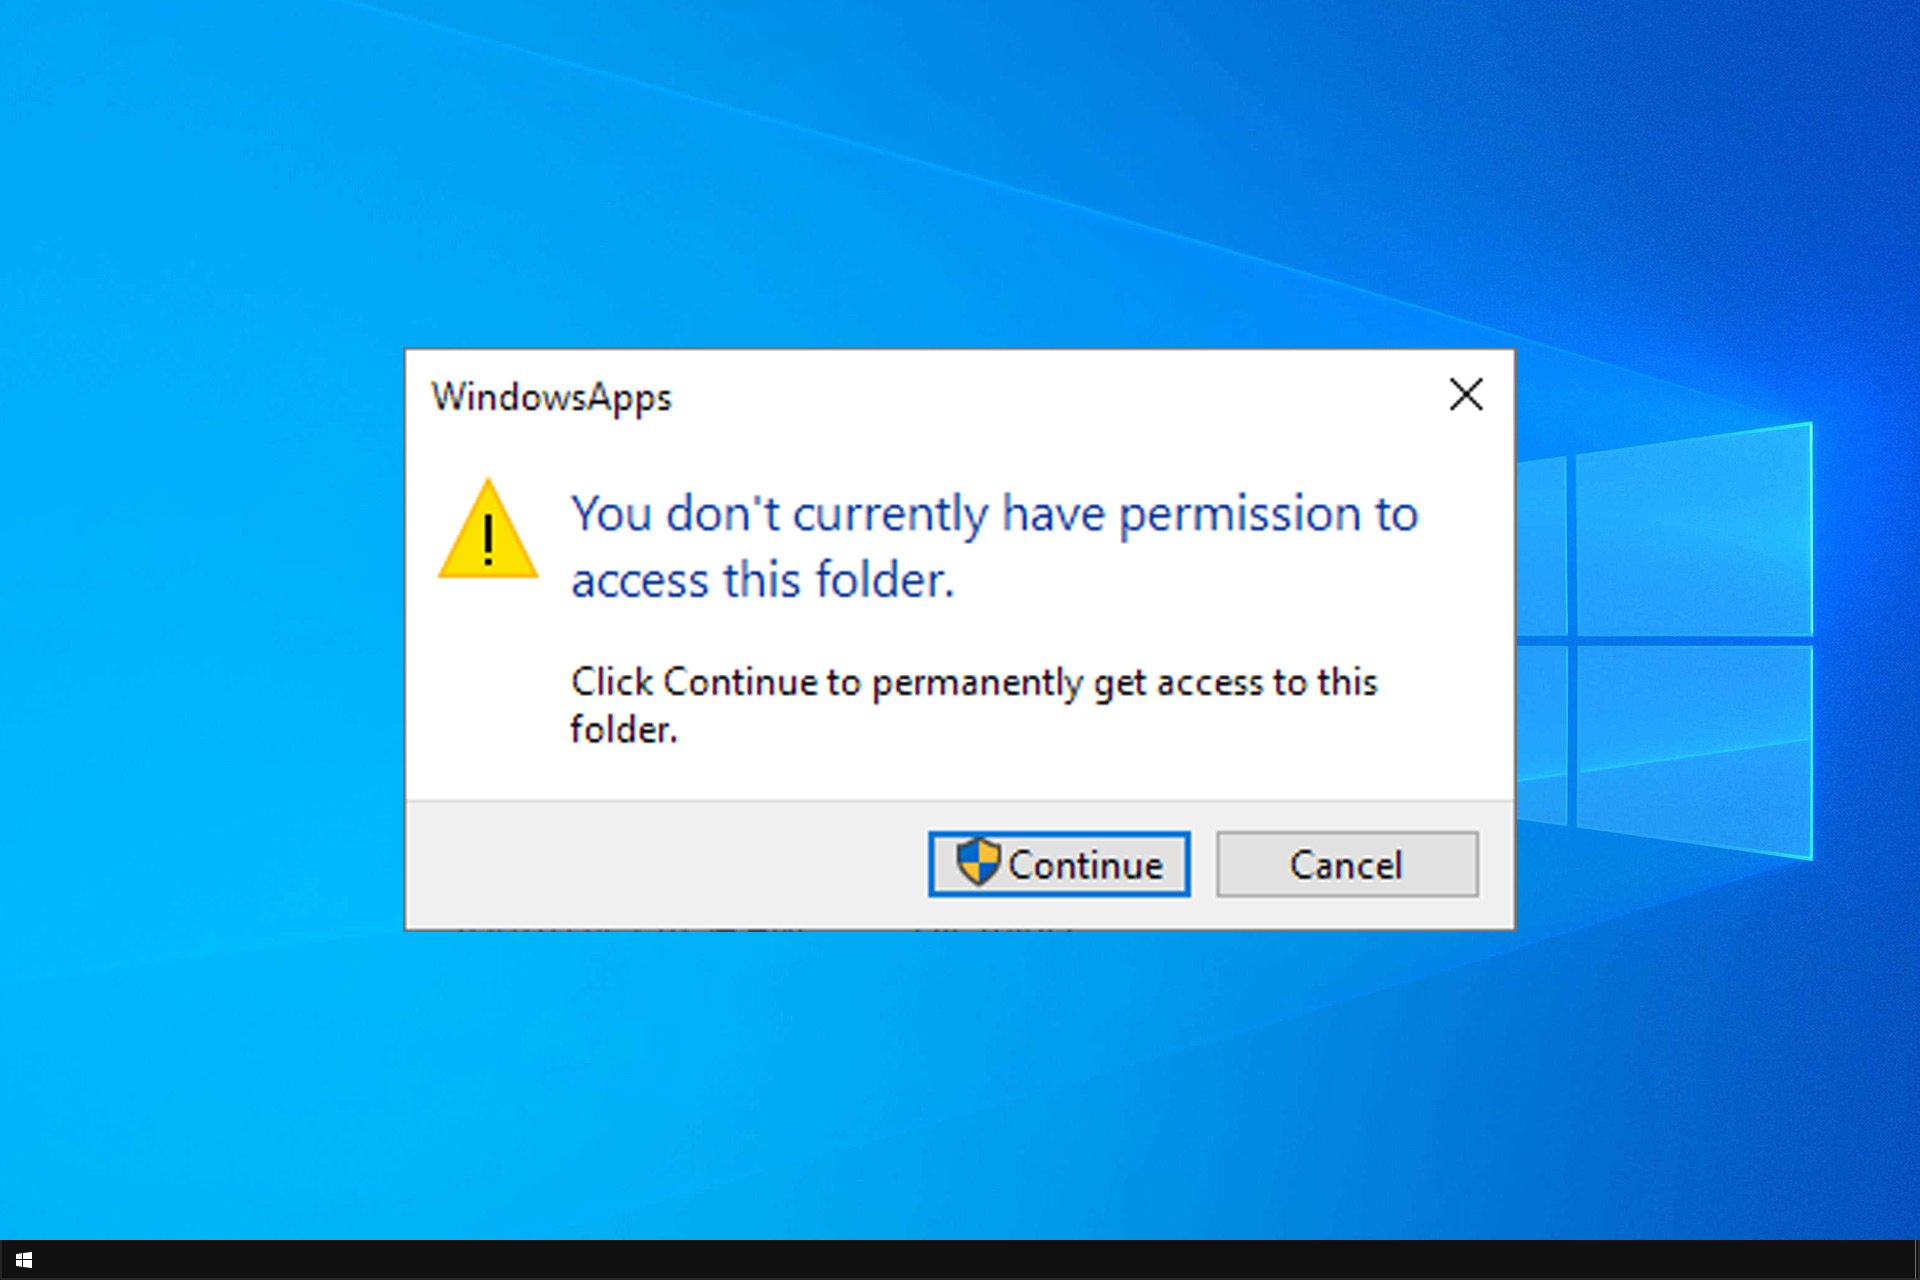 can't access windowsapps folder